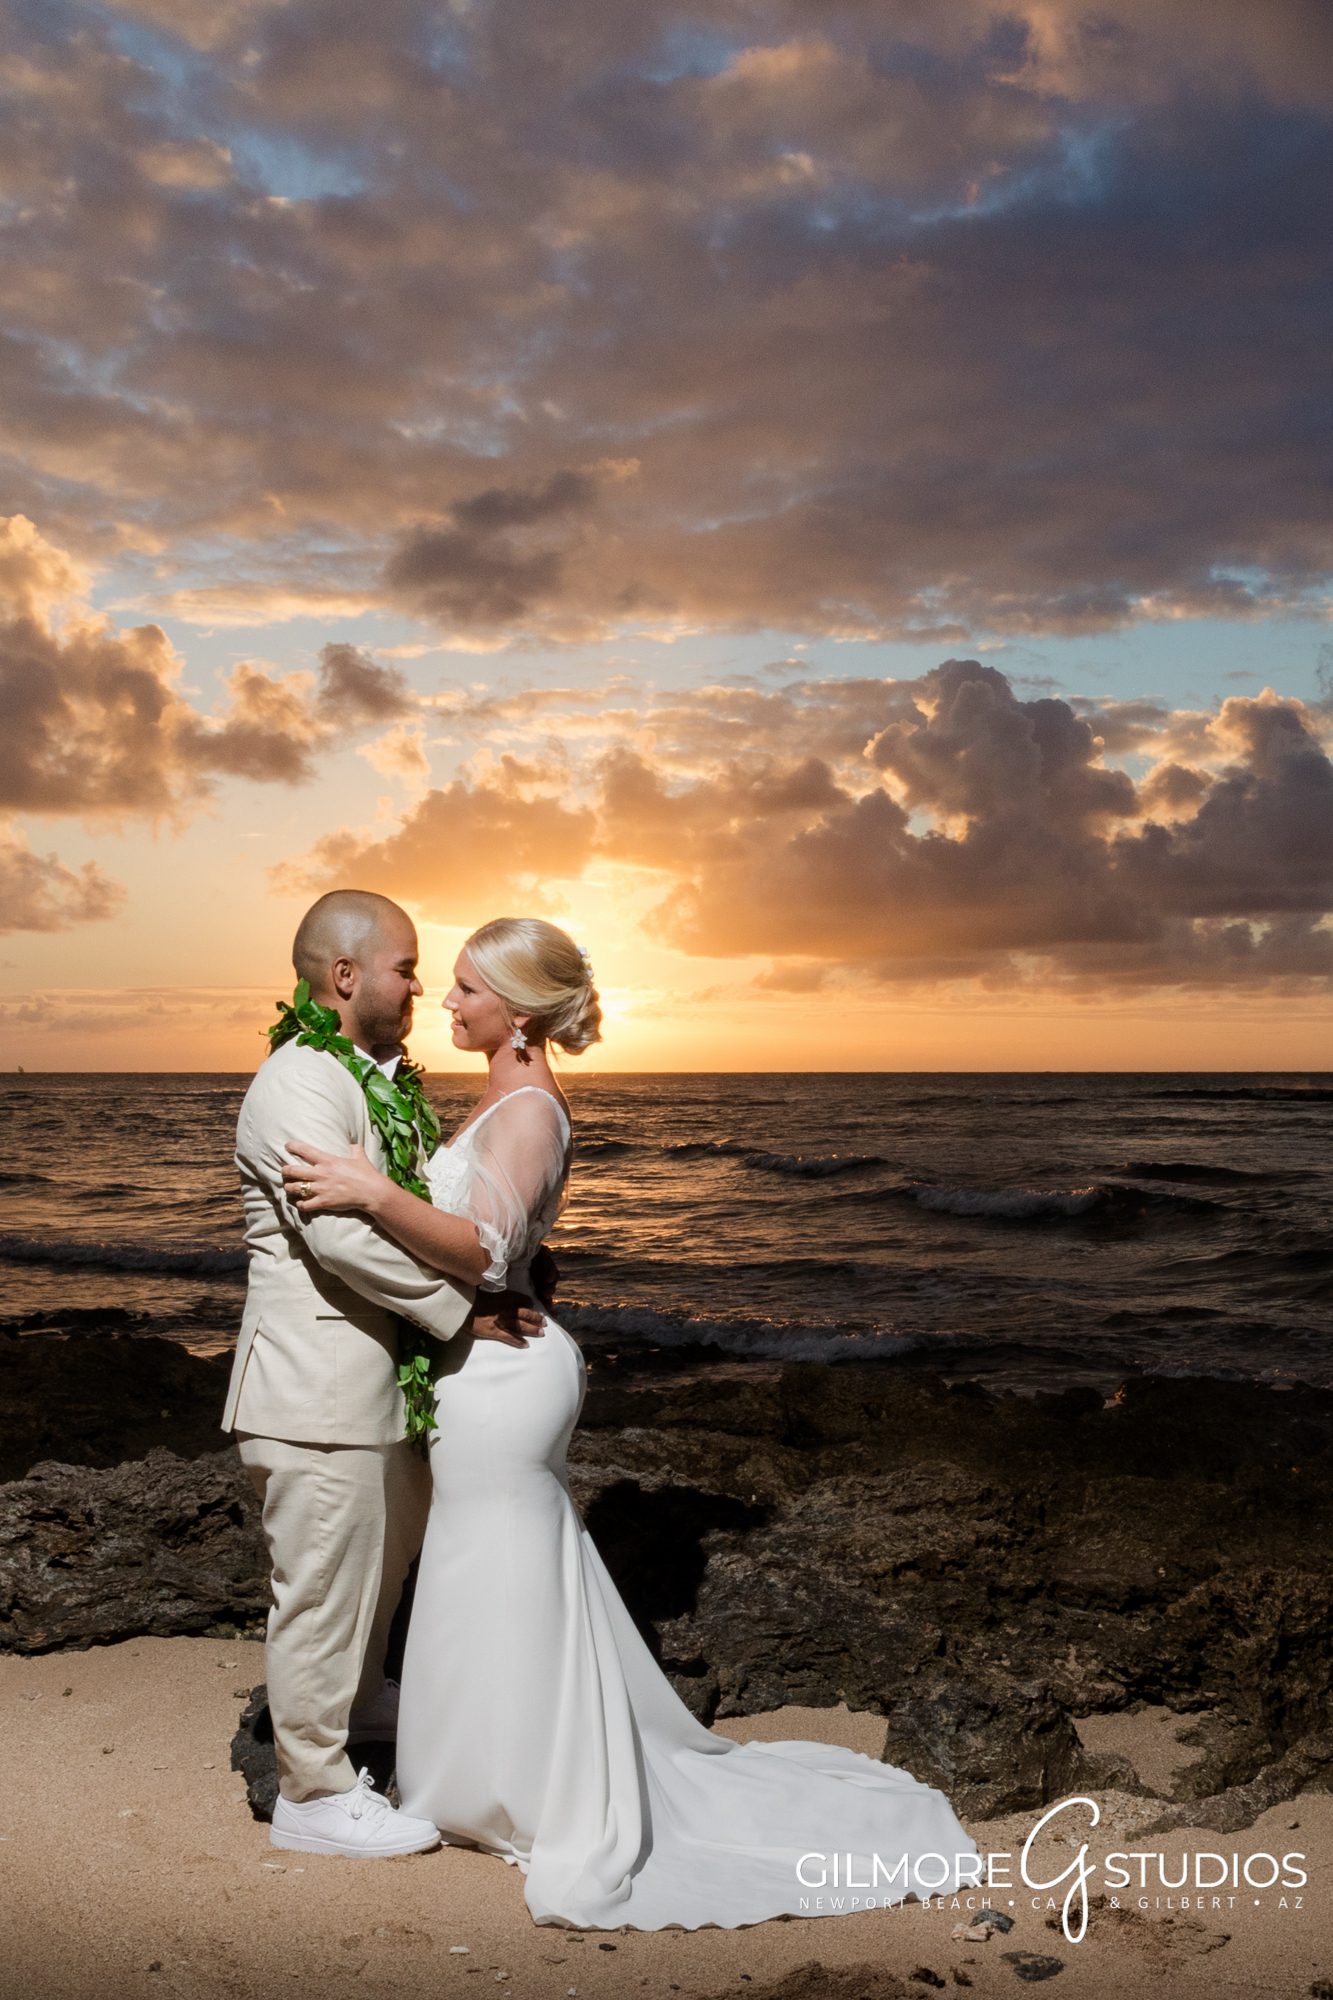 Loulu Palm Wedding Photography, Oahu Weddings - North Shore - Hawaii - Hawaiian Wedding Venue - Beach Wedding - Aloha Wedding - Gilmore Studios - wedding day - wedding dress - gown - Hawaiian sunset - sky - skies - clouds - sun - bride and groom - beach weddings 